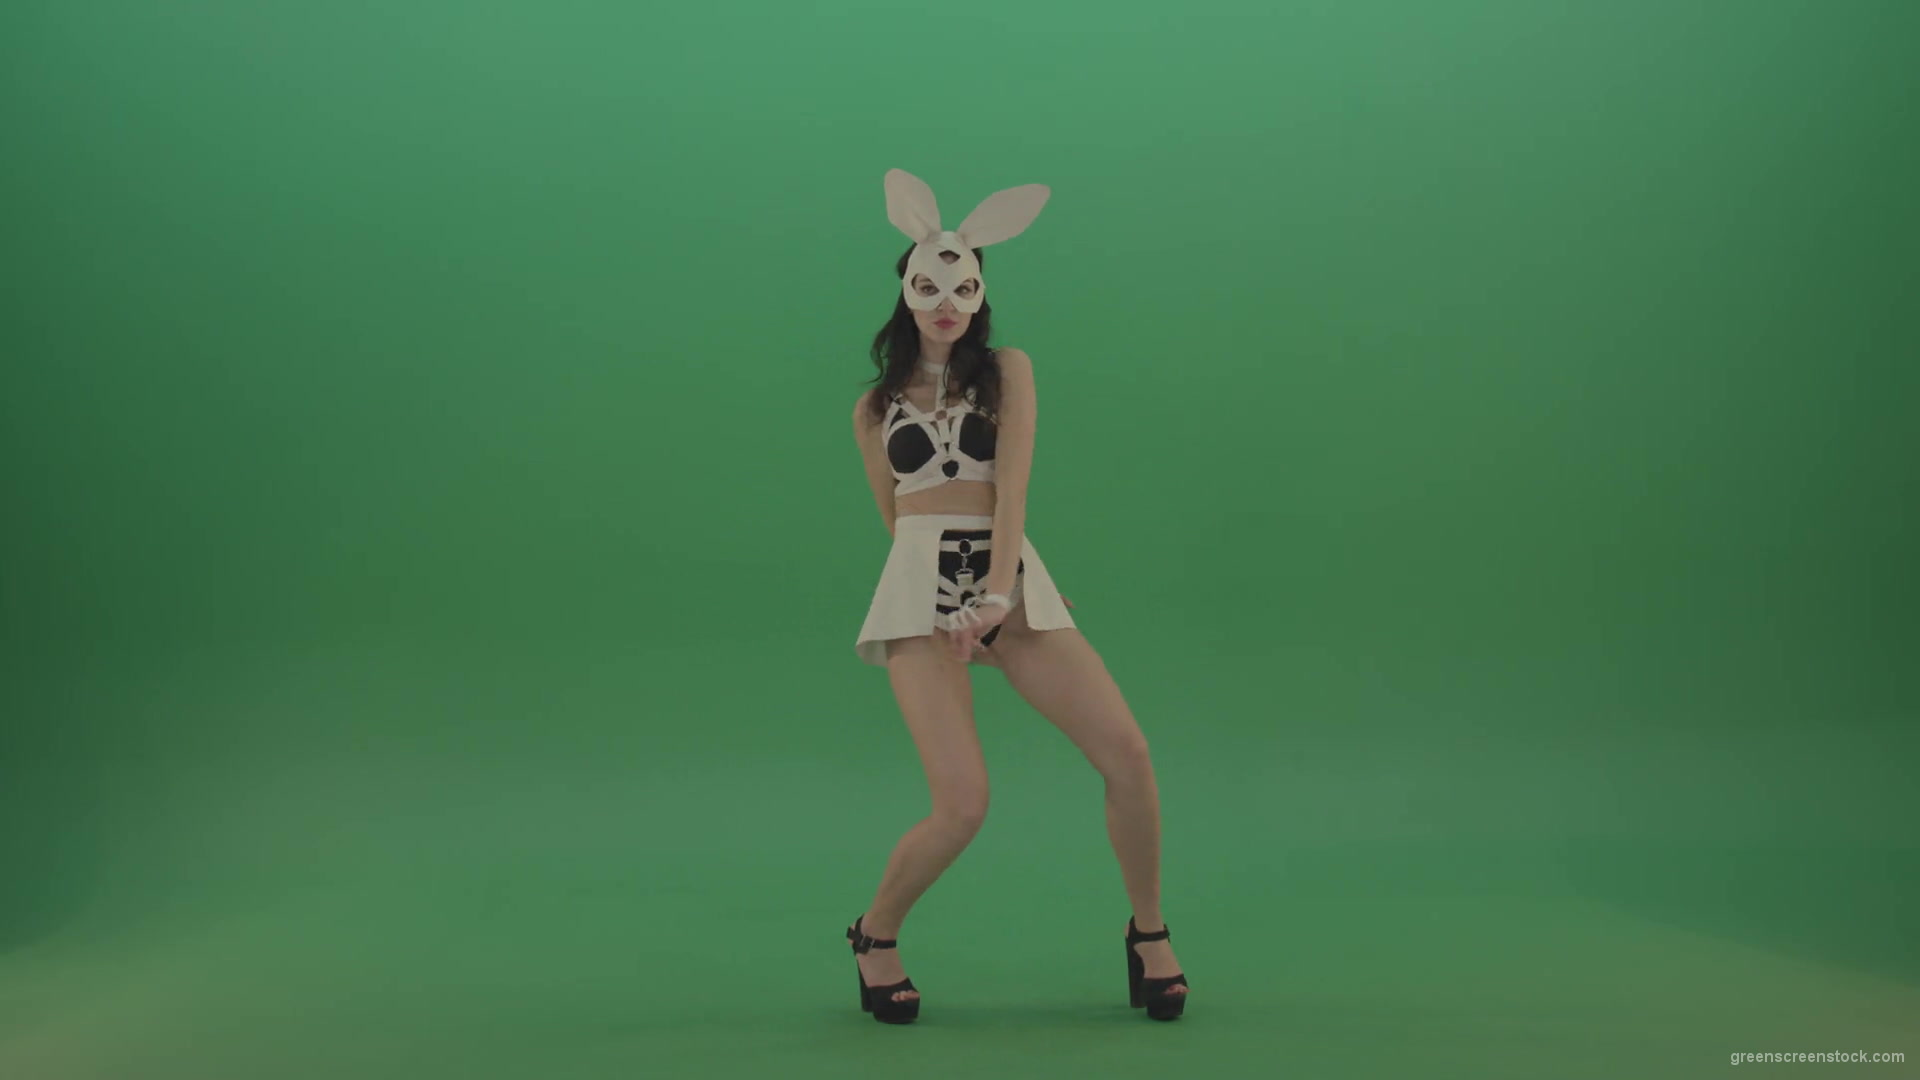 Sexy-posing-Bunny-Girl-dancing-Go-Go-Rabbit-Dance-over-Green-Screen-1920_004 Green Screen Stock